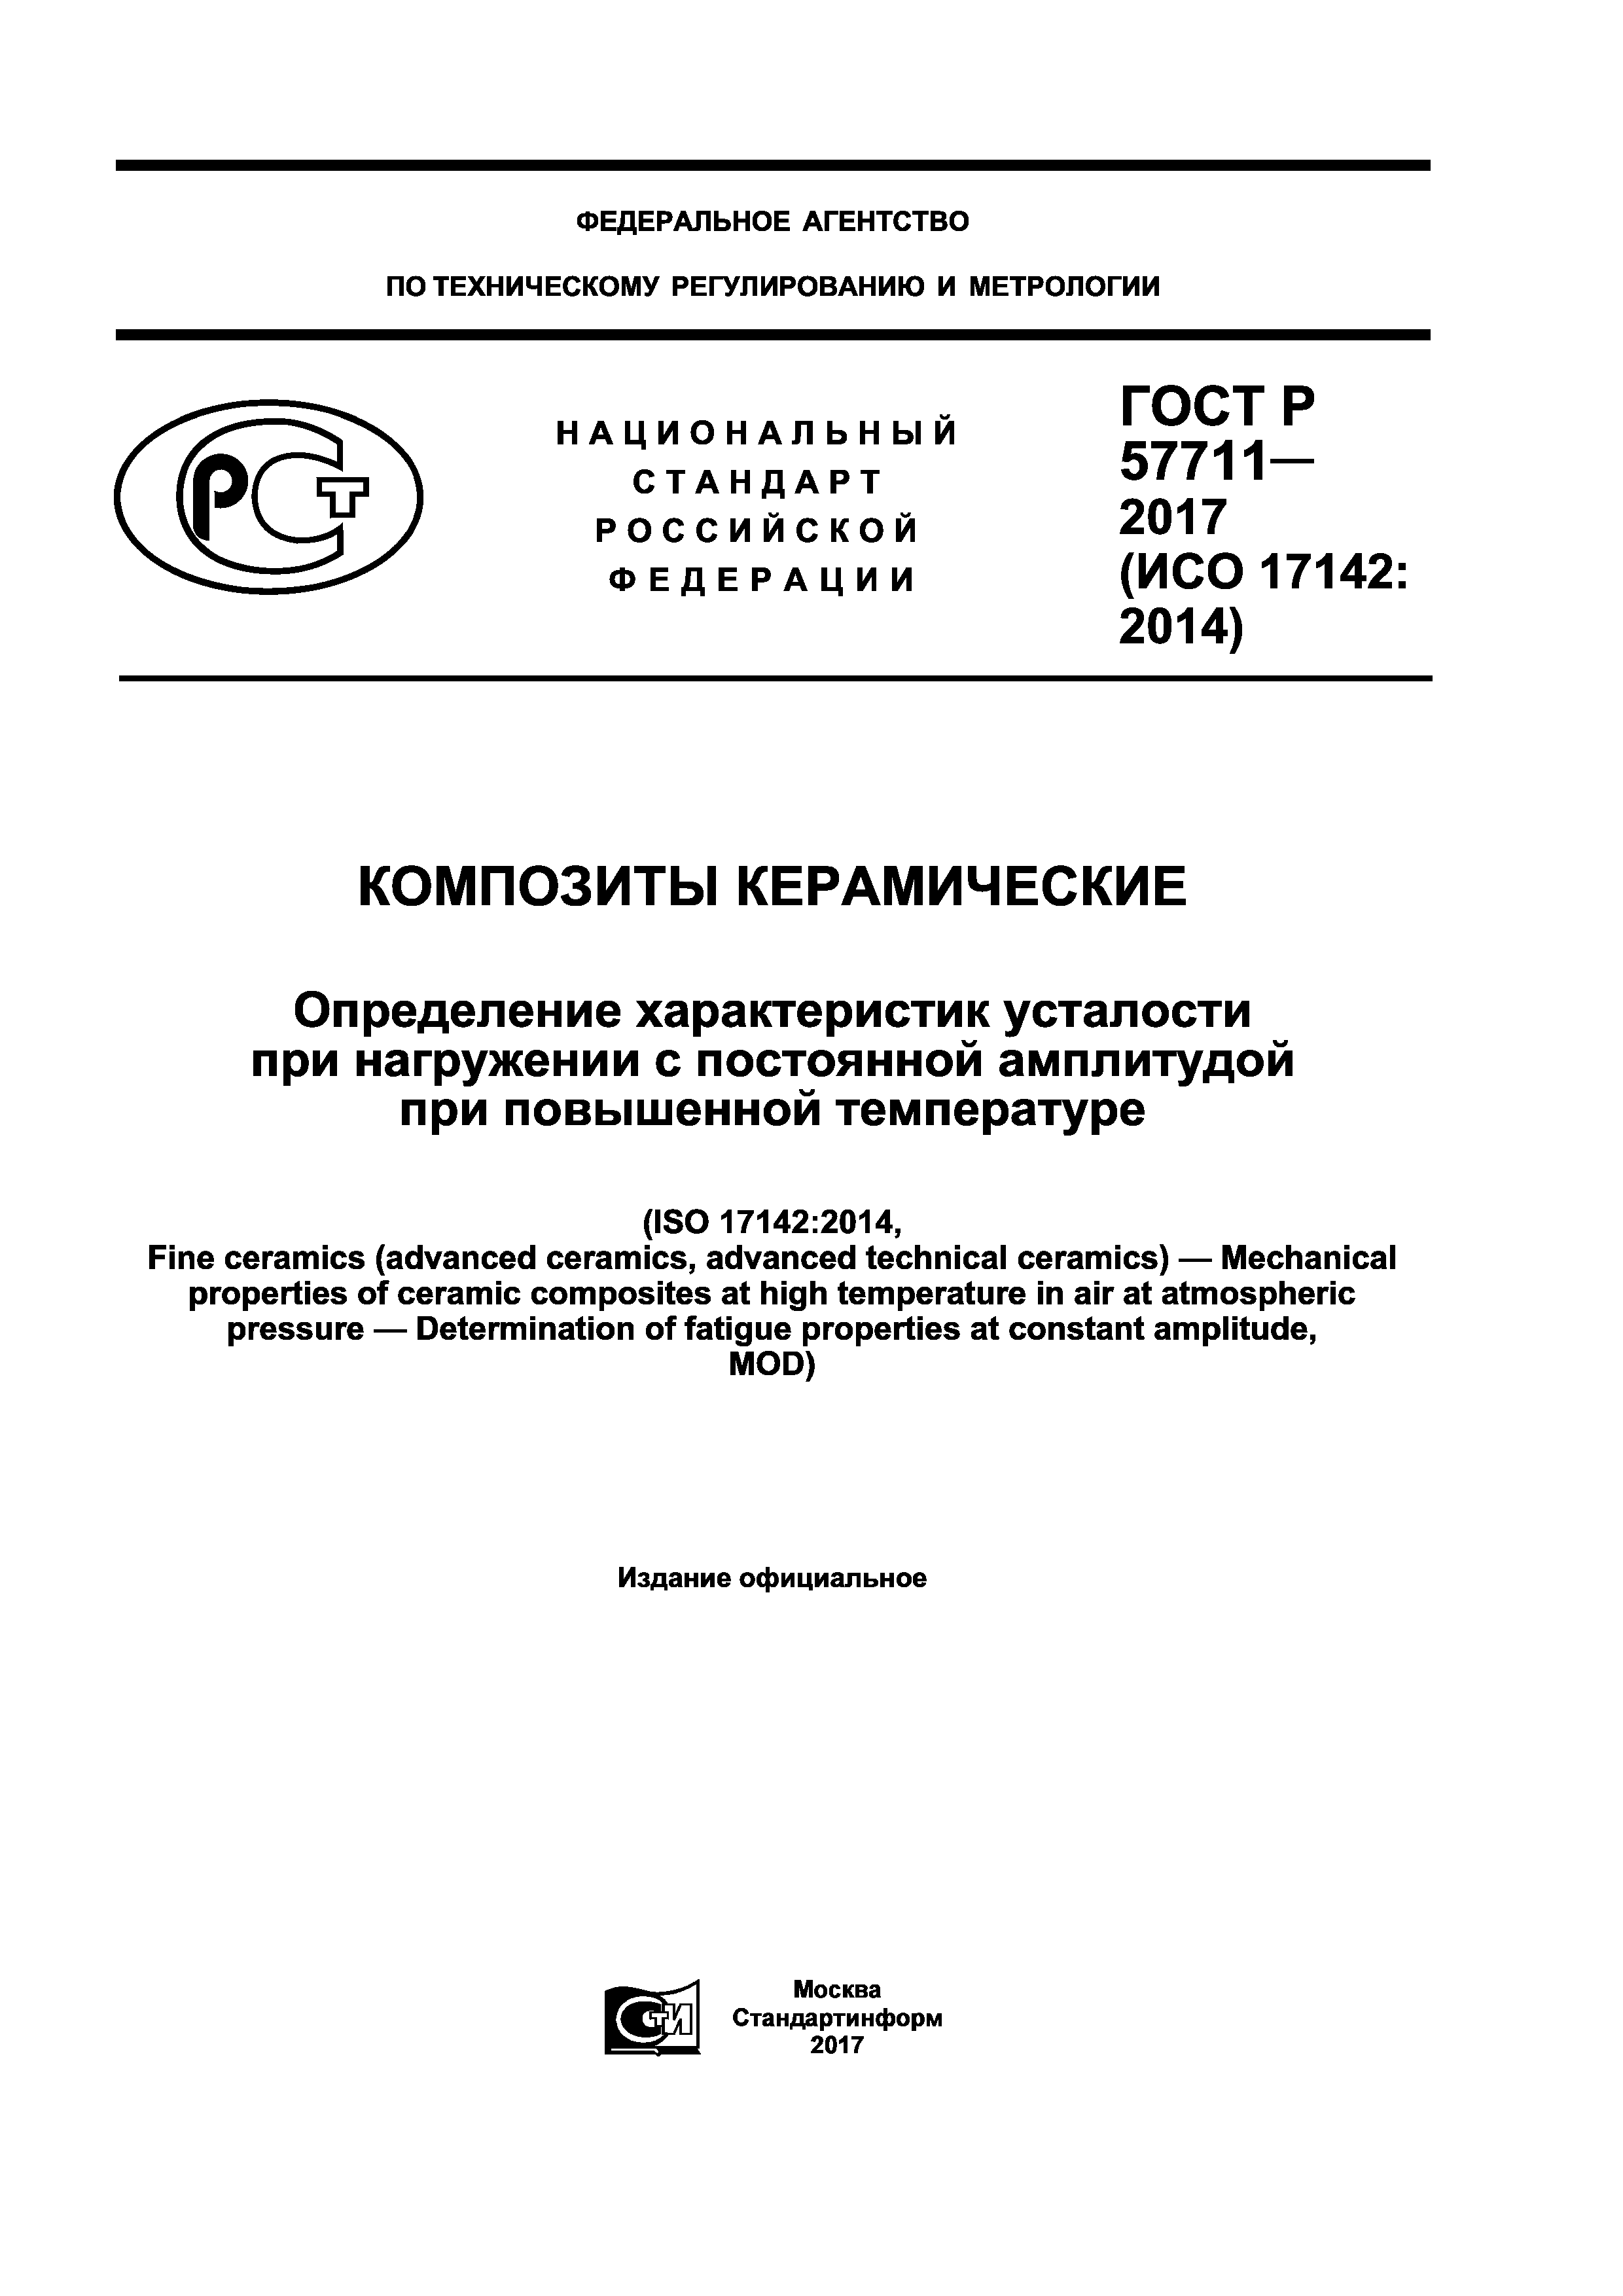 ГОСТ Р 57711-2017